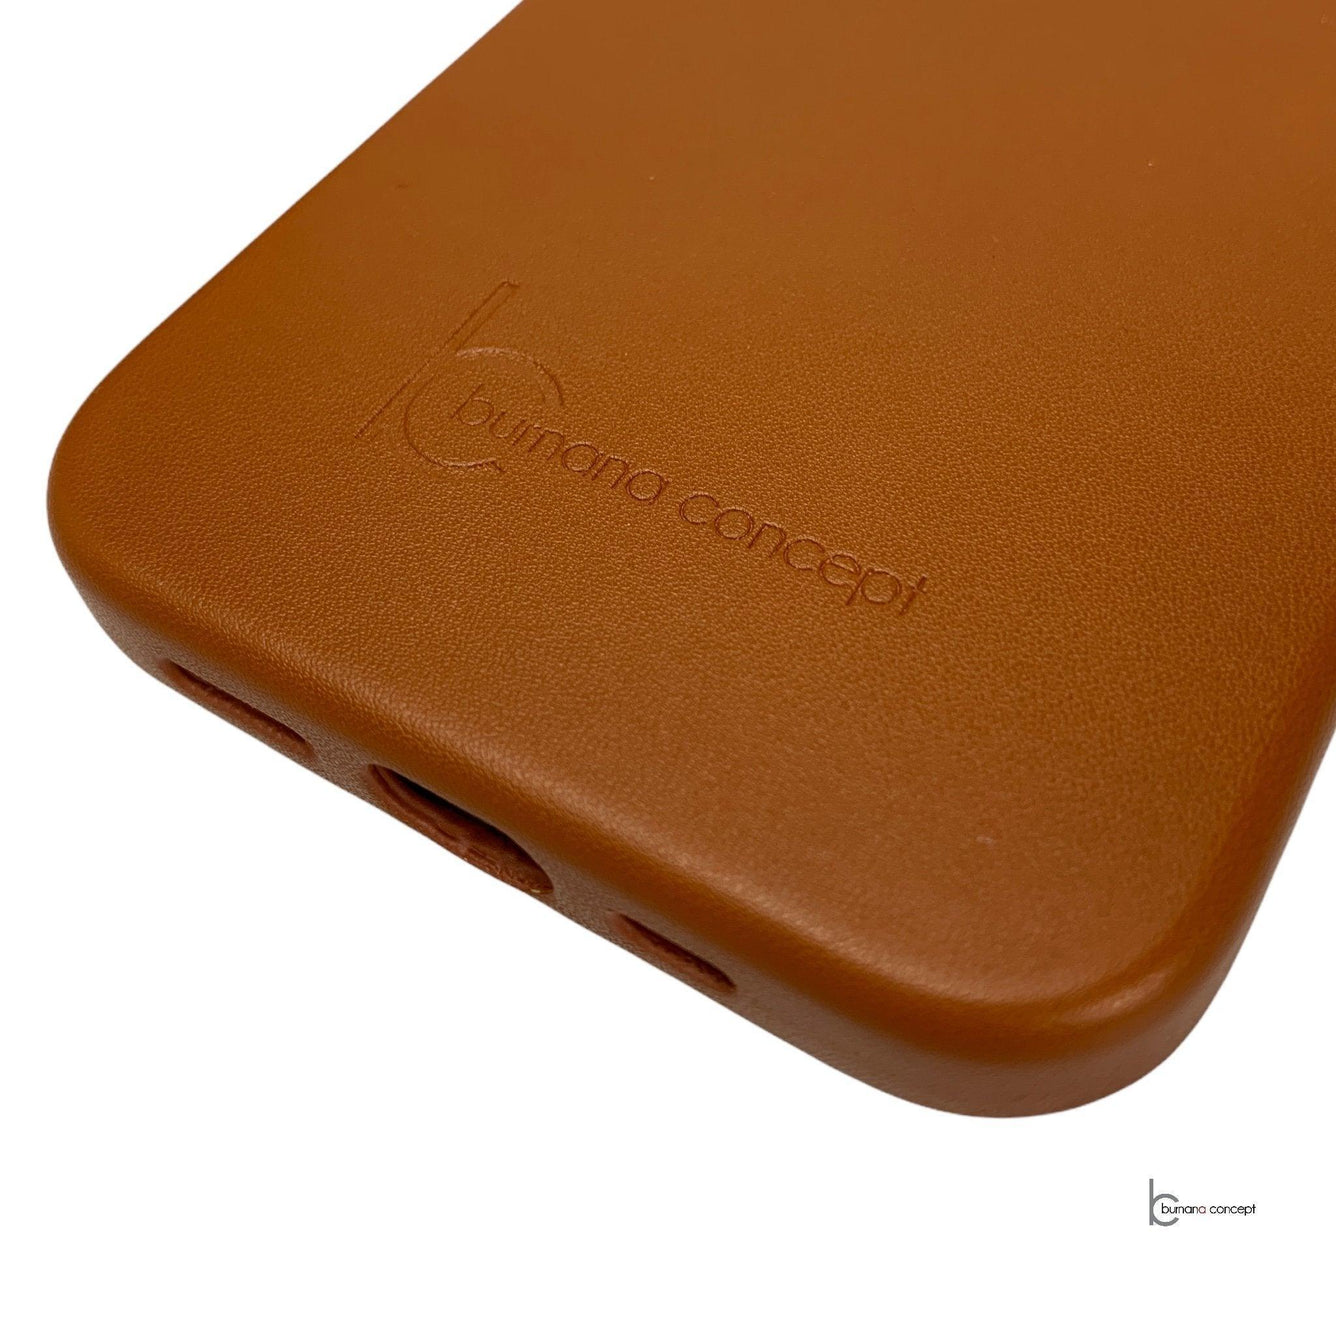 Burnana Concept Leather Case For iPhone 13 Pro - Burnana Concept 